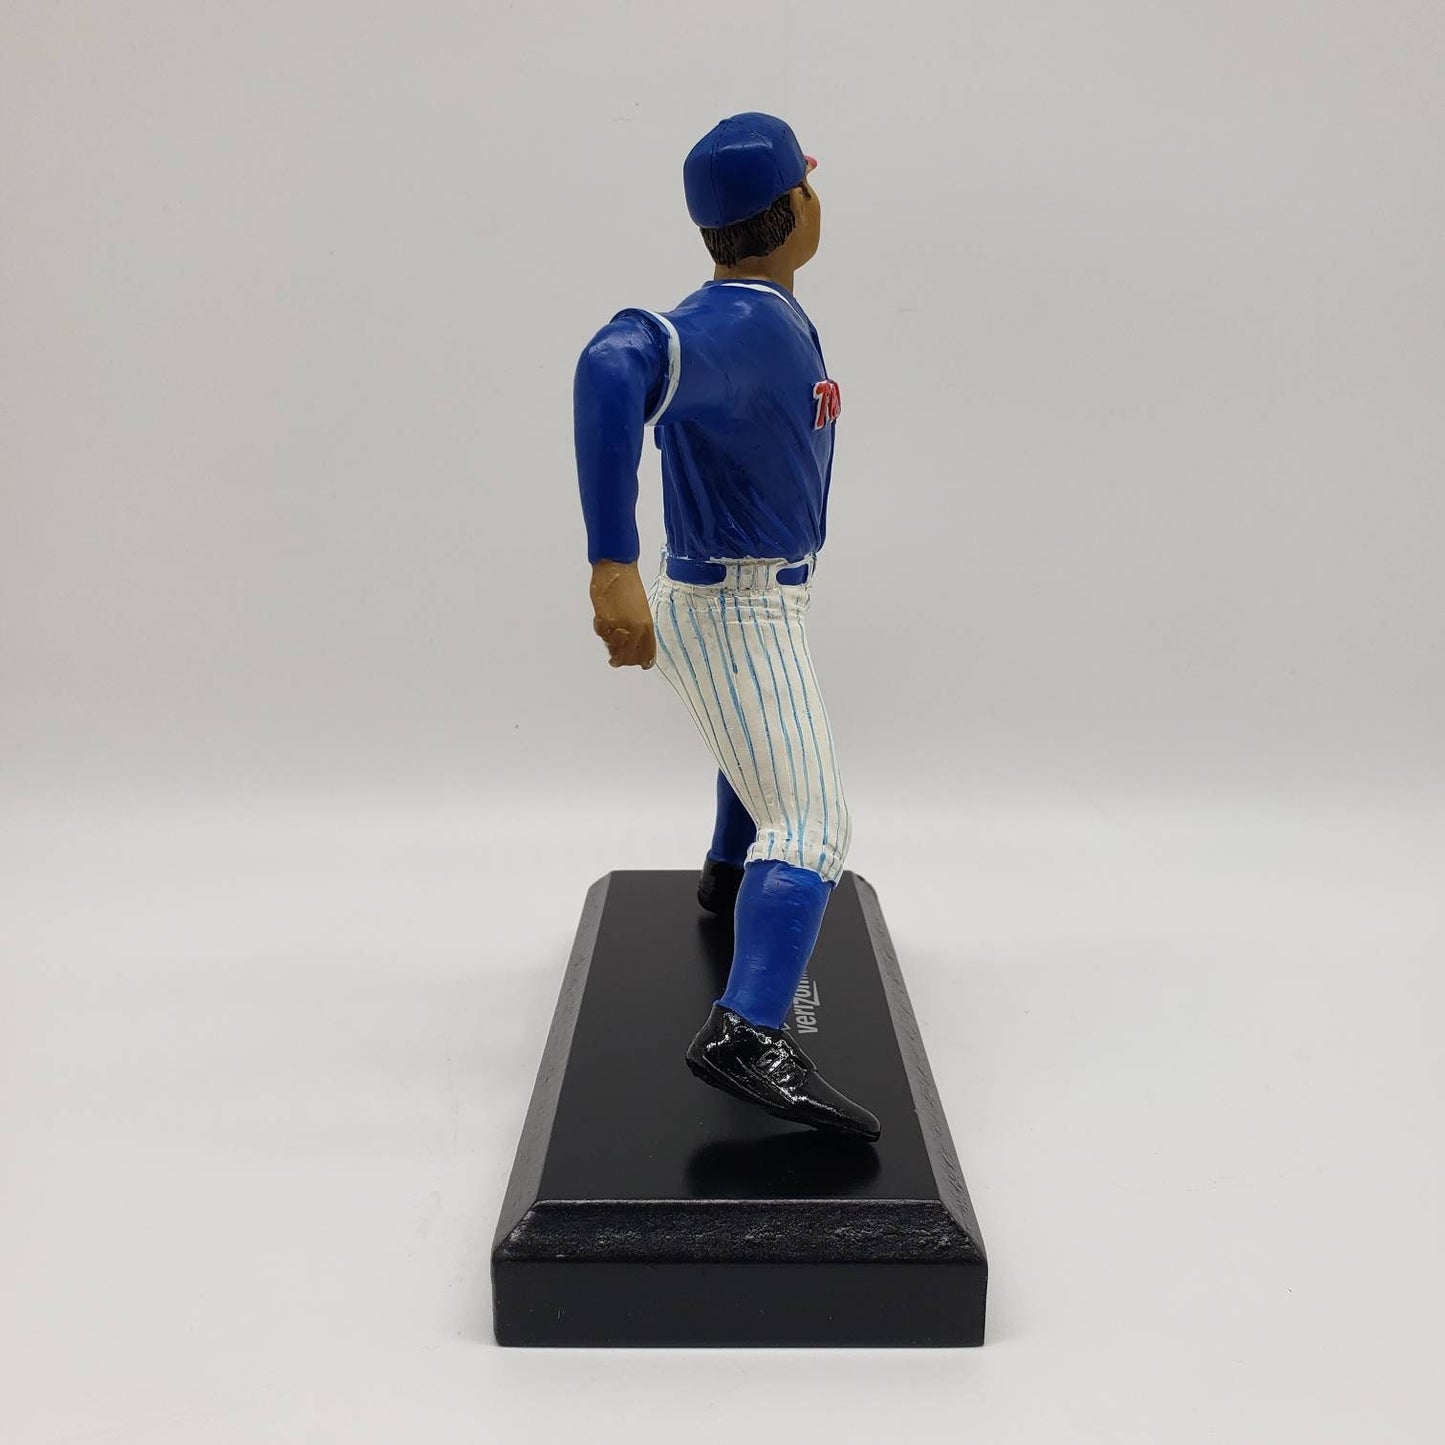 Joba Chamberlain 62 Trenton Thunder Blue Verizon Collectable Baseball Player Figurine Vintage Baseball Pitcher Statue MLB Baseball Decor